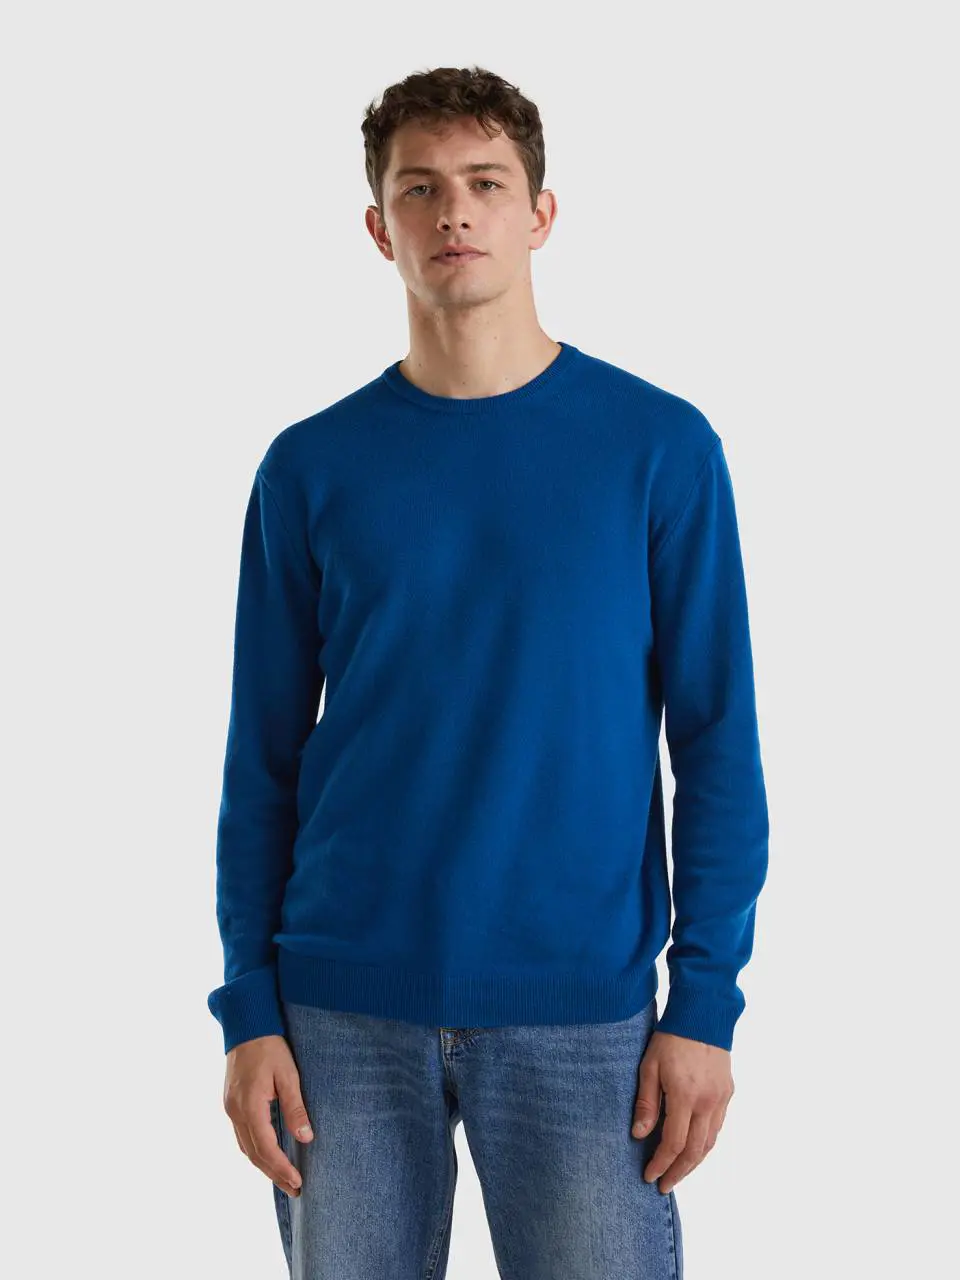 Benetton blue crew neck sweater in pure merino wool. 1